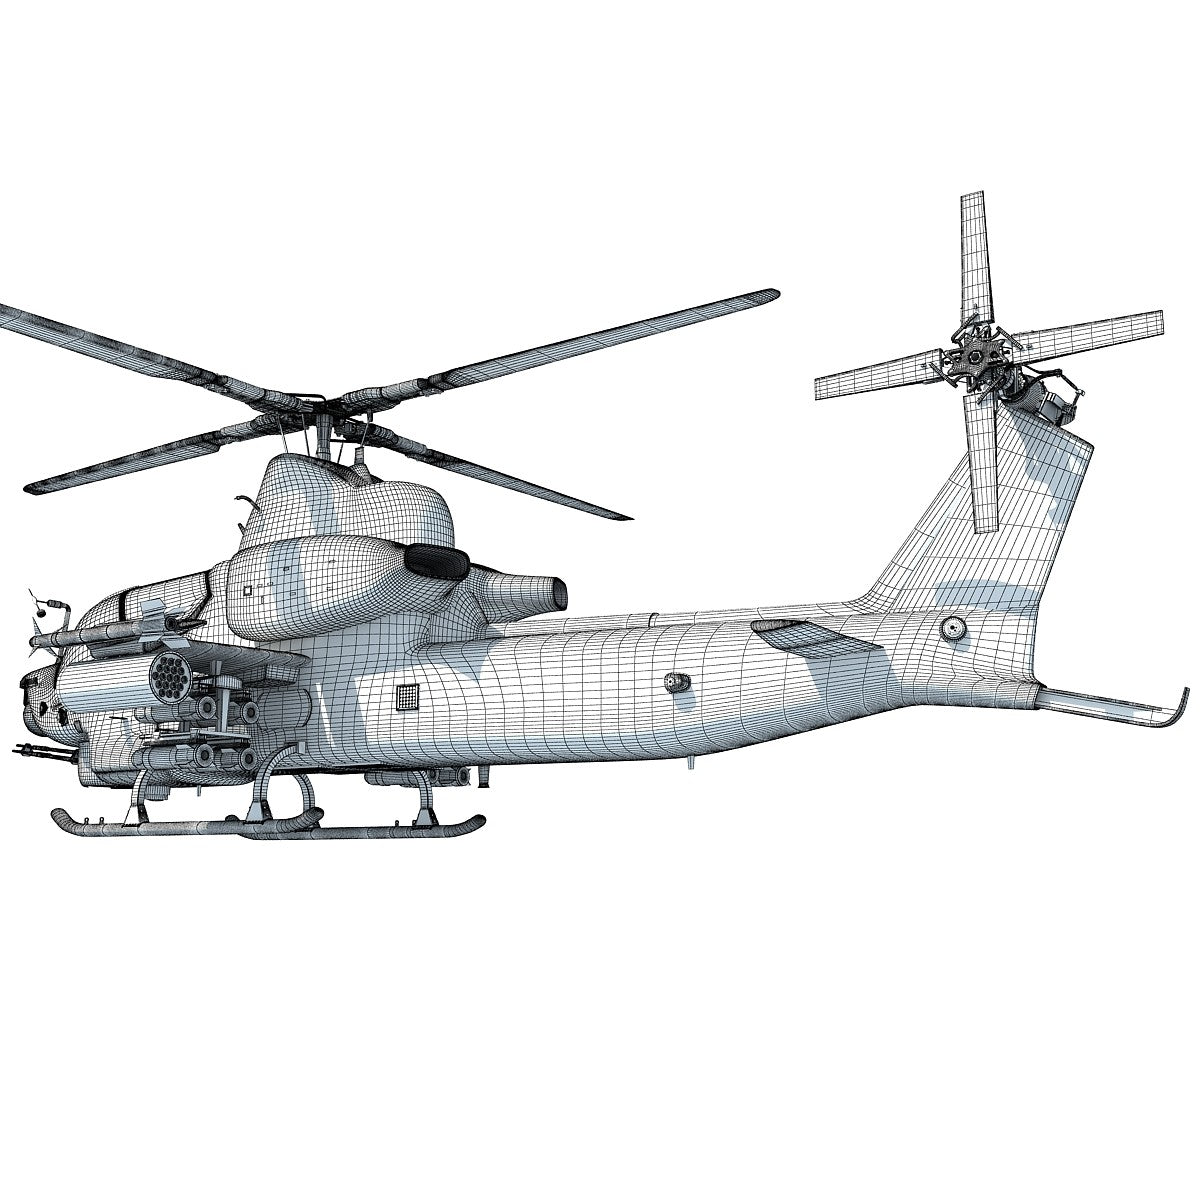 3D Helicopter Models